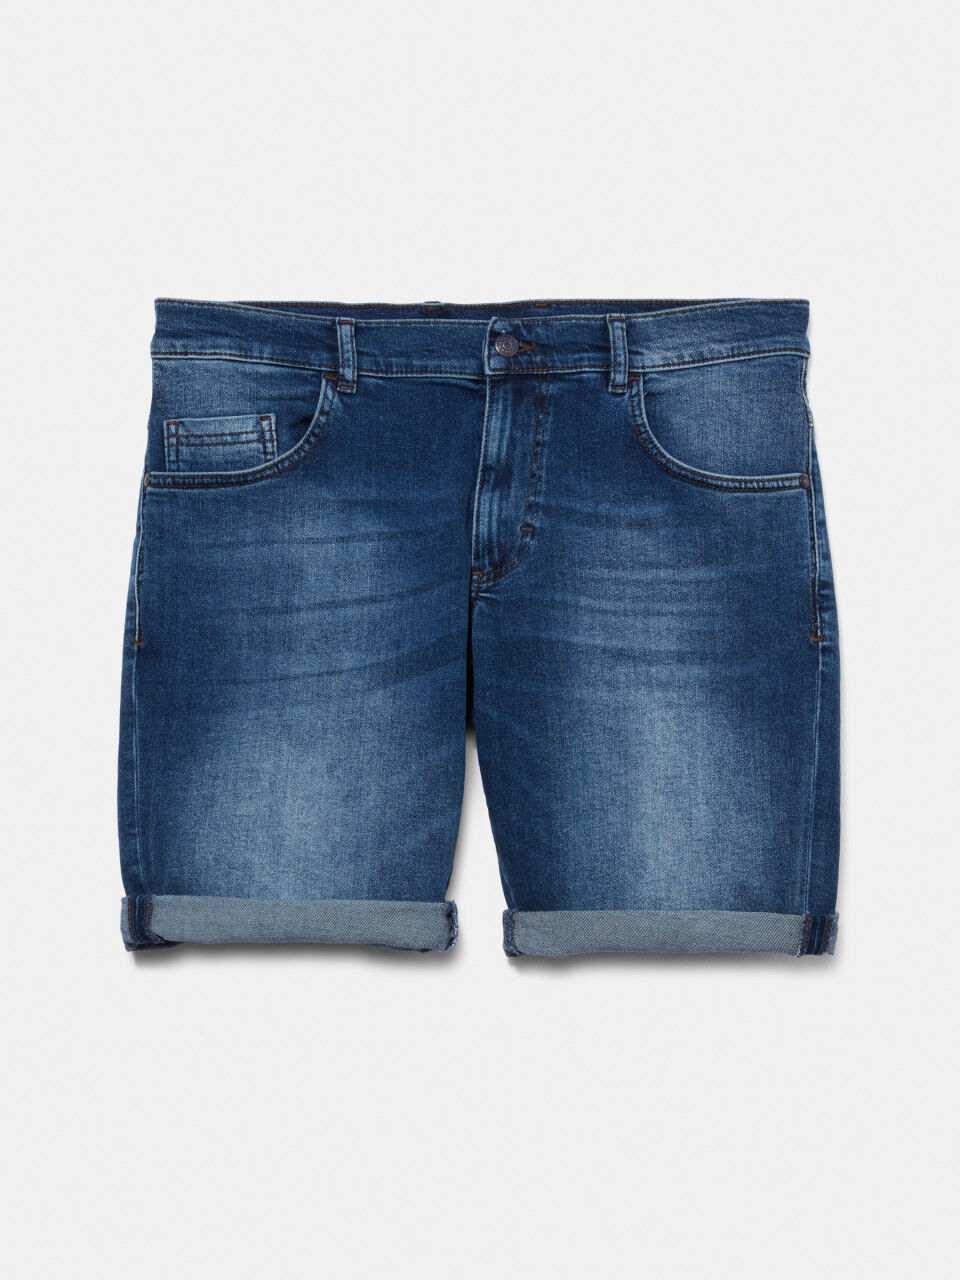 Mens Jeans Straight Slim Short Casual Pants Ripped Skinny Denim Shorts  Trousers | eBay